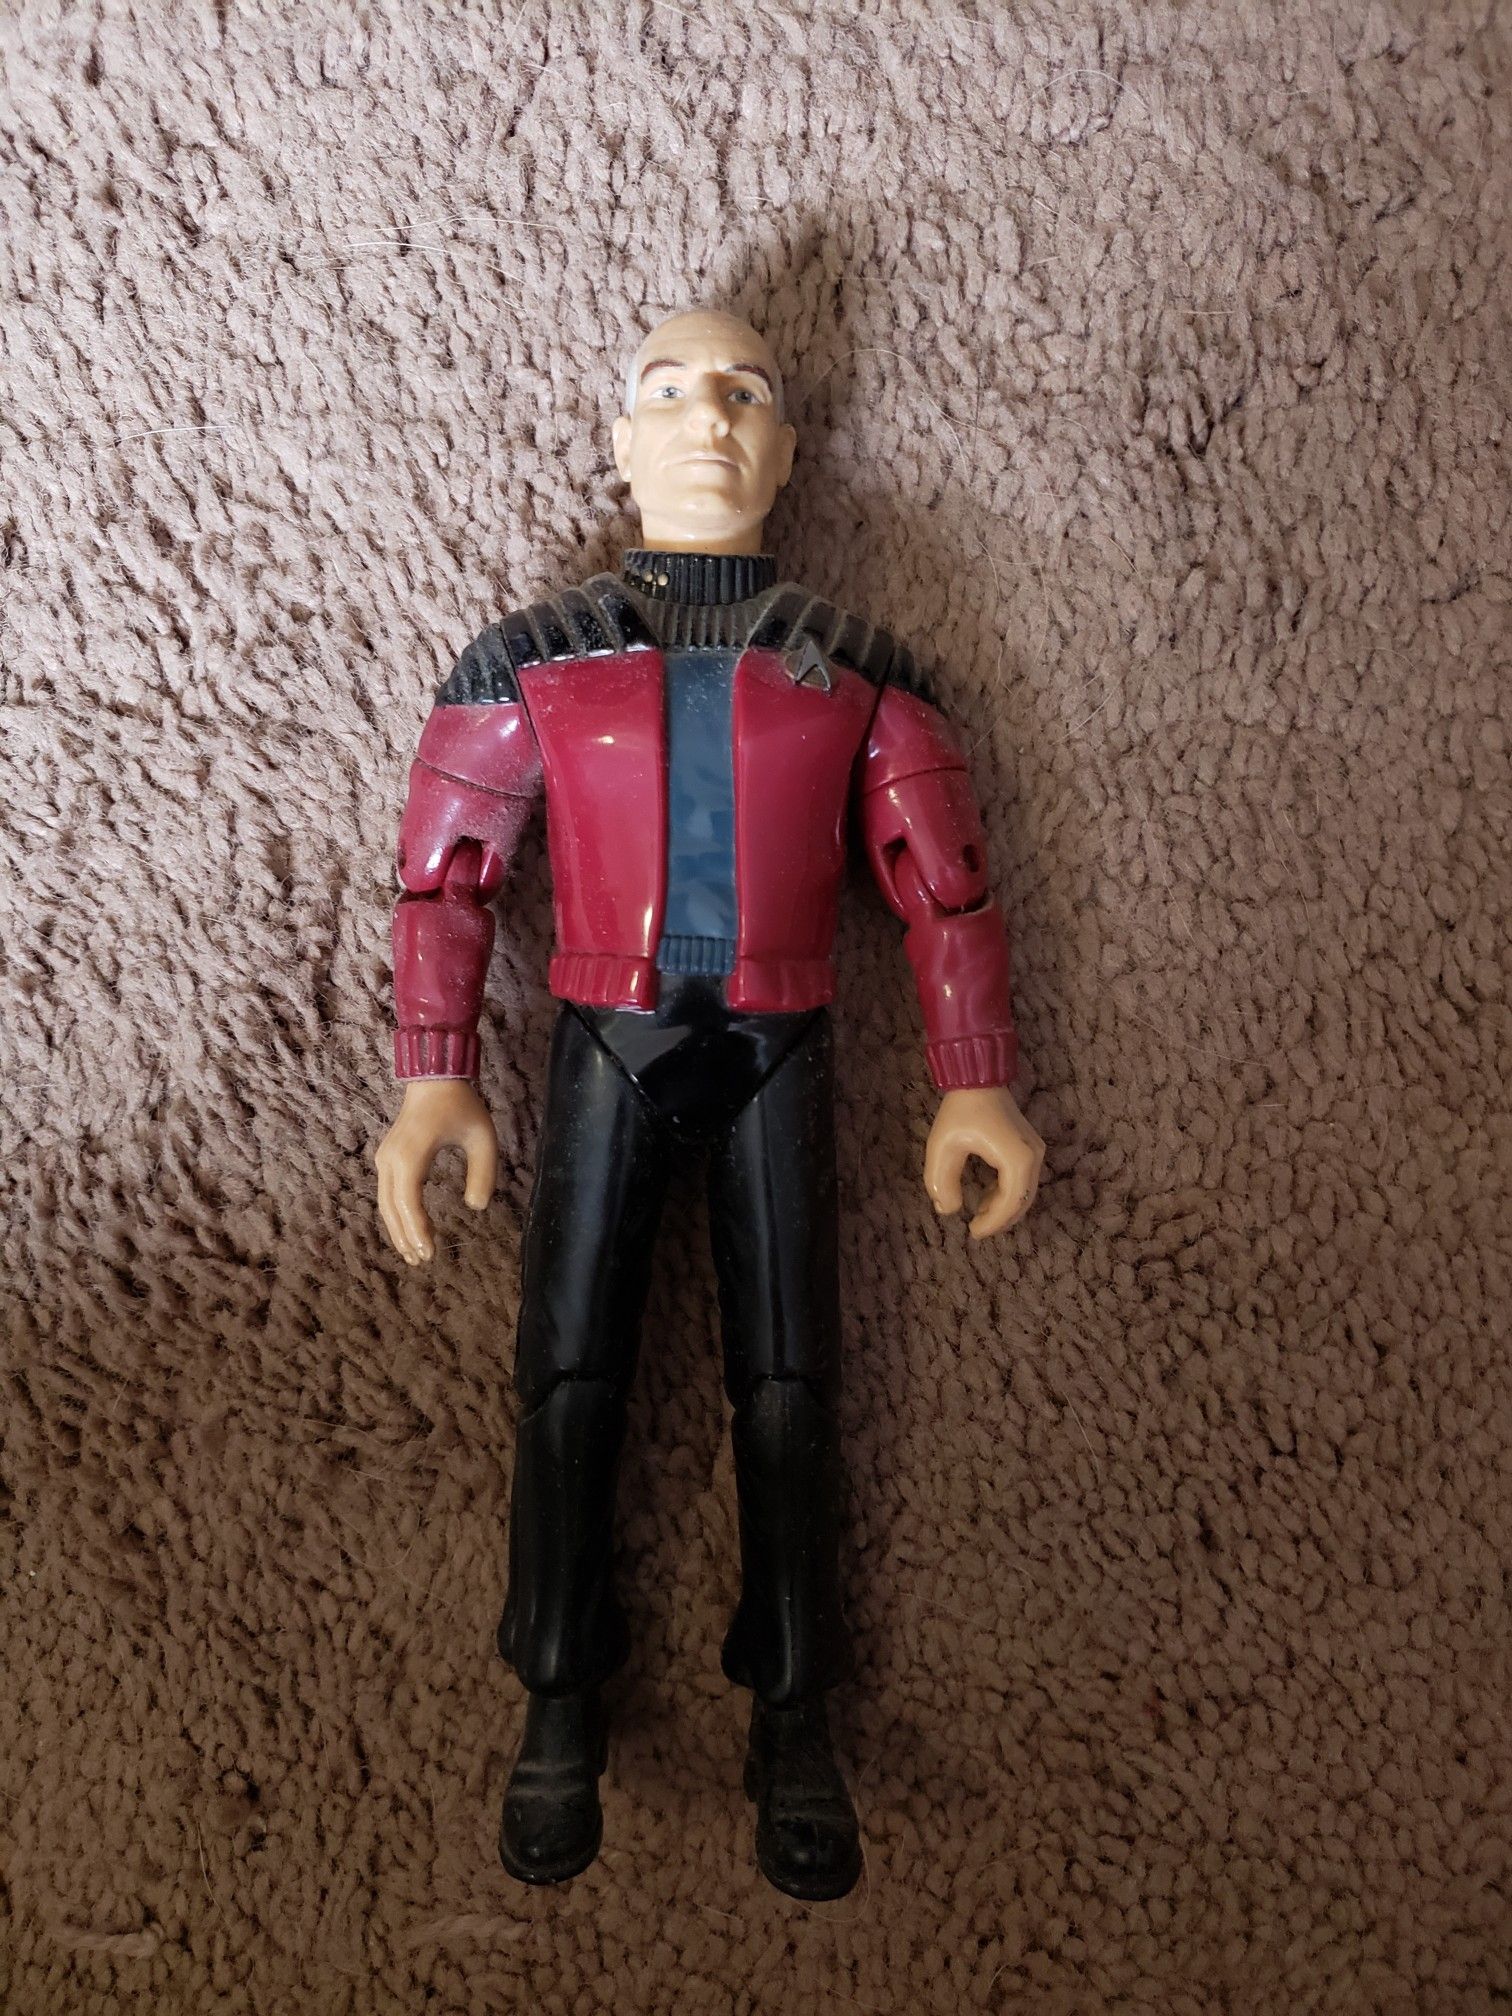 Star trek talking capt Picard figure